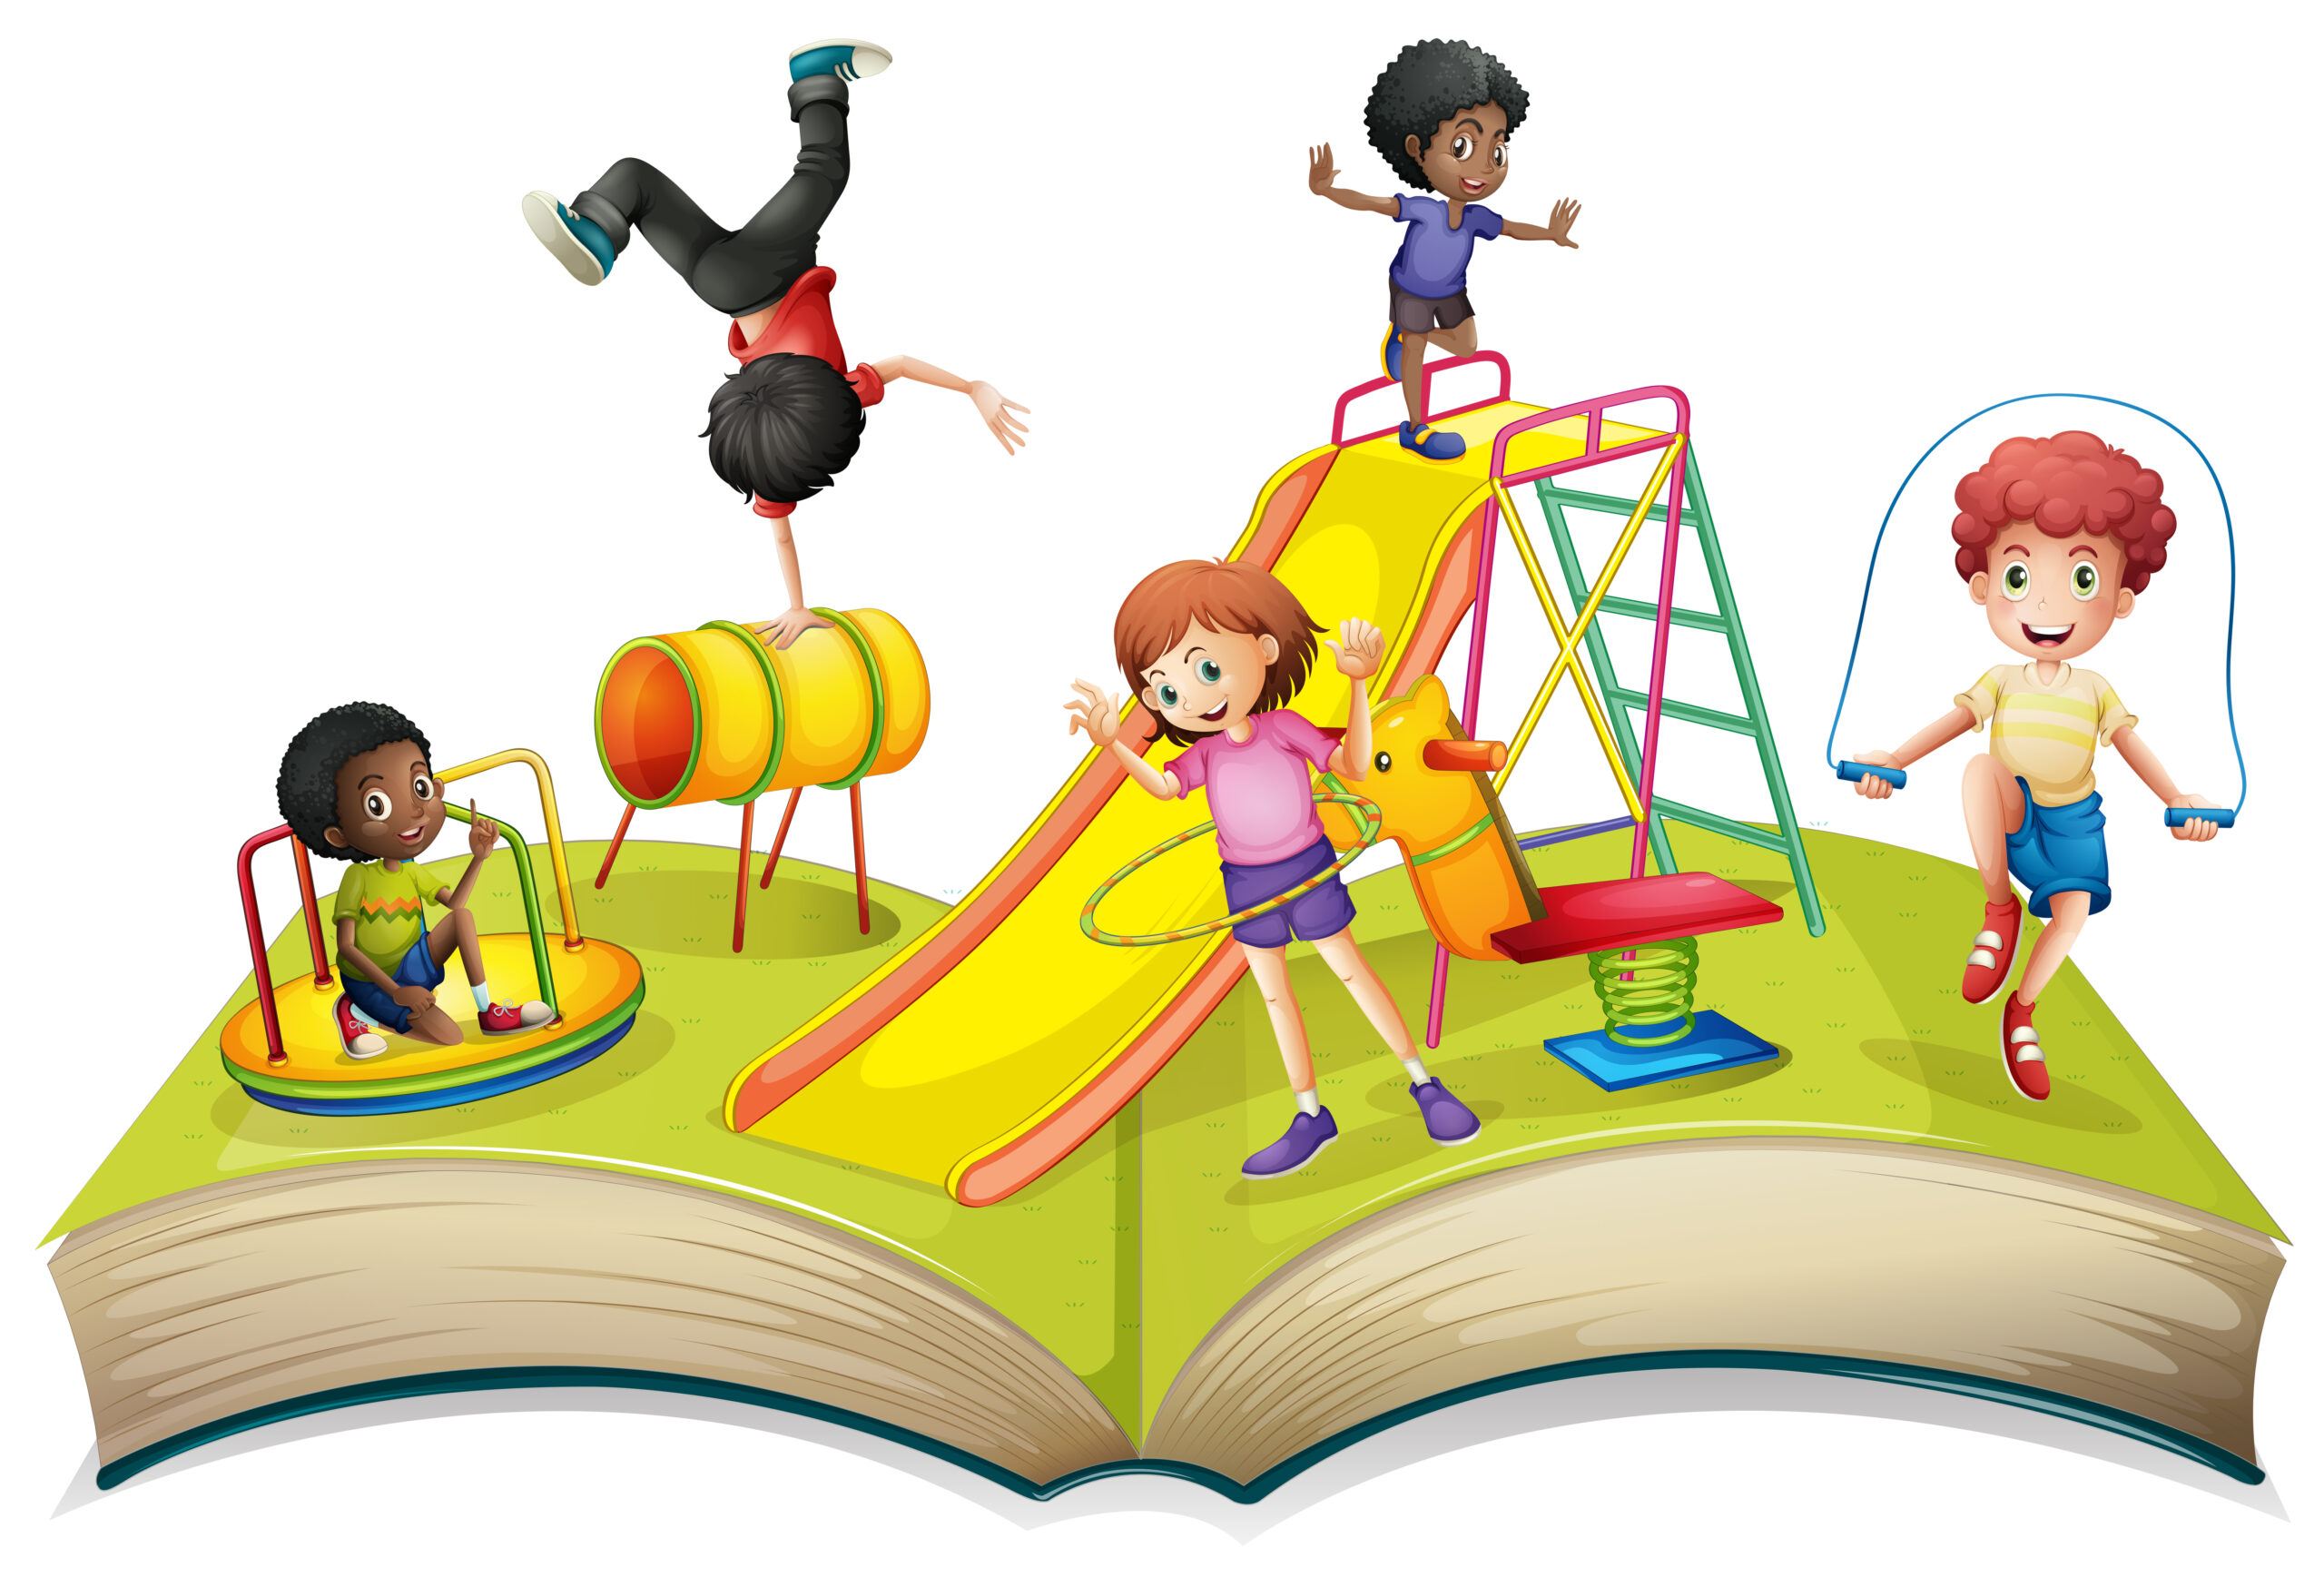 Children playing in playground illustration